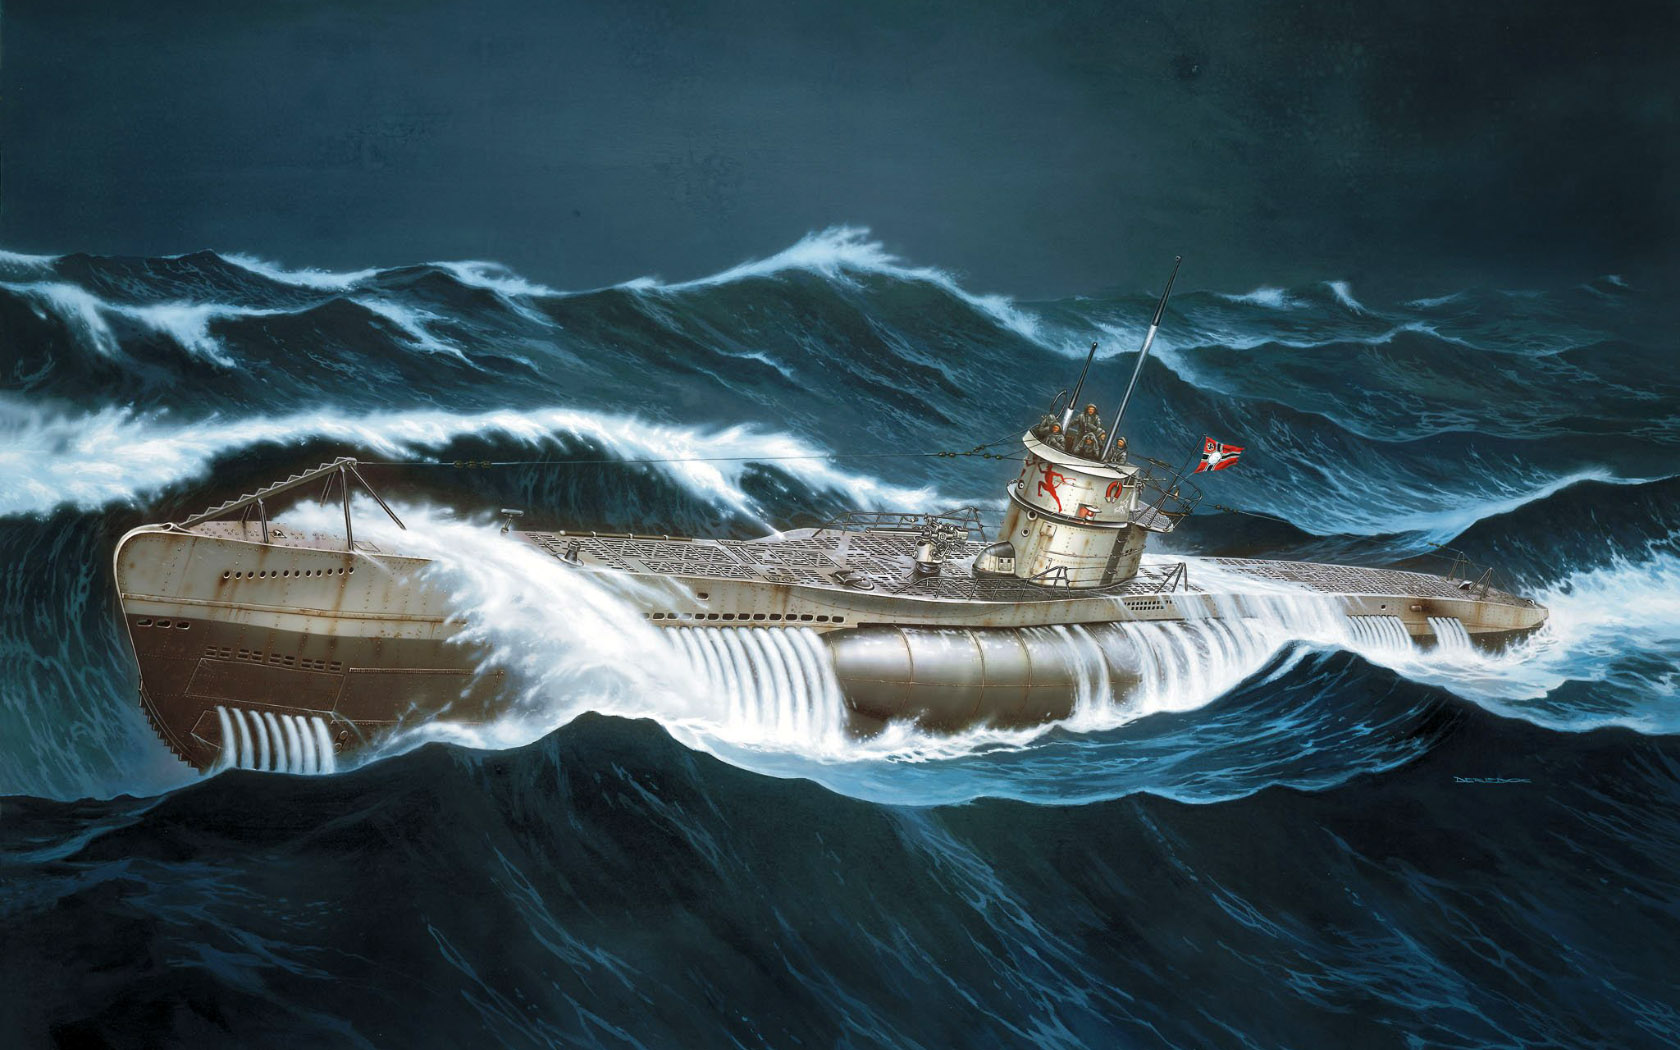 General 1680x1050 warship military water ship artwork waves flag navy Kriegsmarine U-Boat submarine World War II